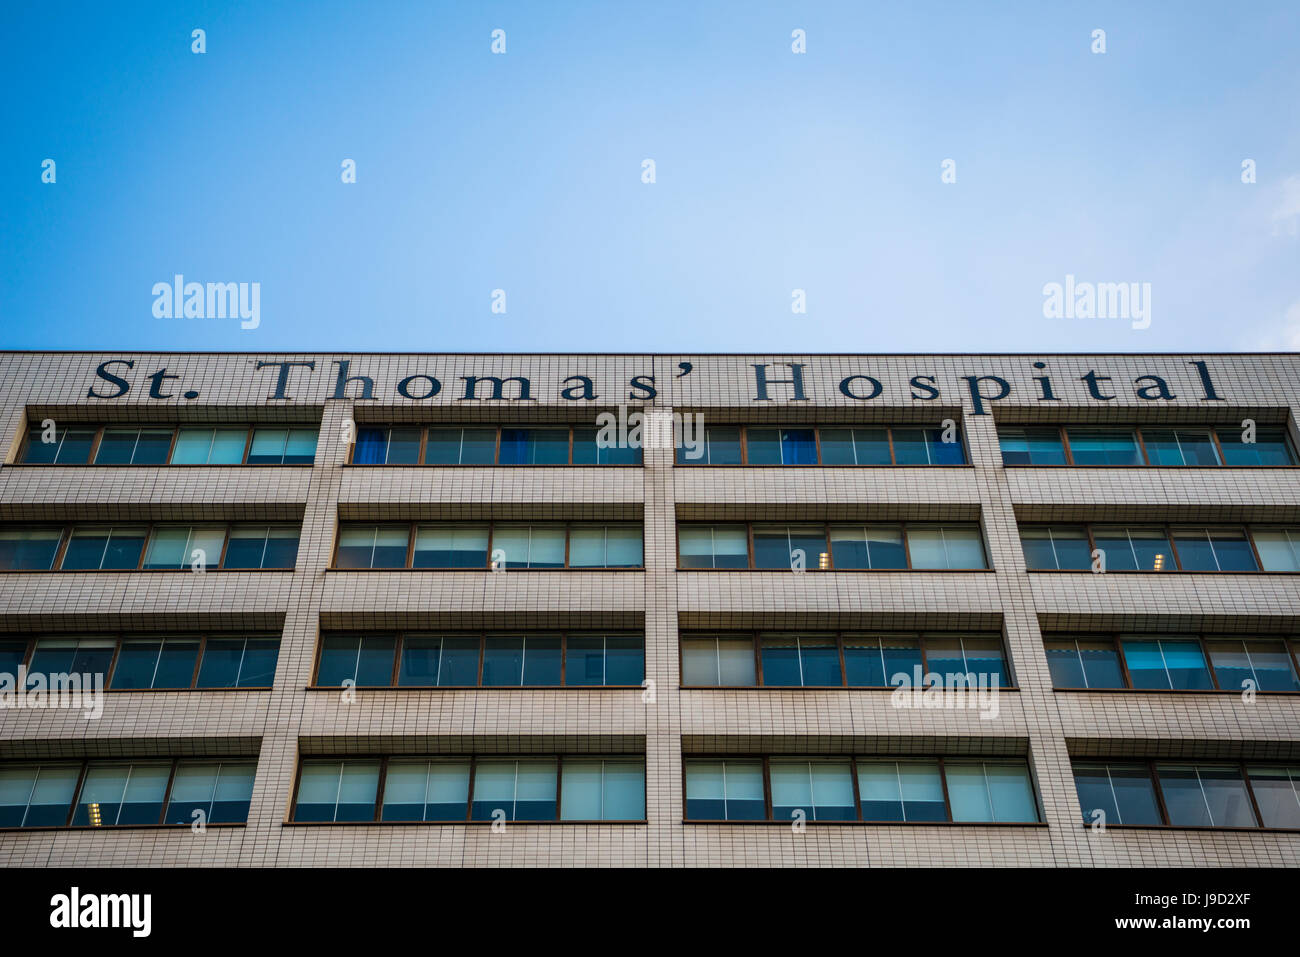 Saint Thomas d'hôpital, hôpital, façade, Londres, Angleterre, Royaume-Uni Banque D'Images